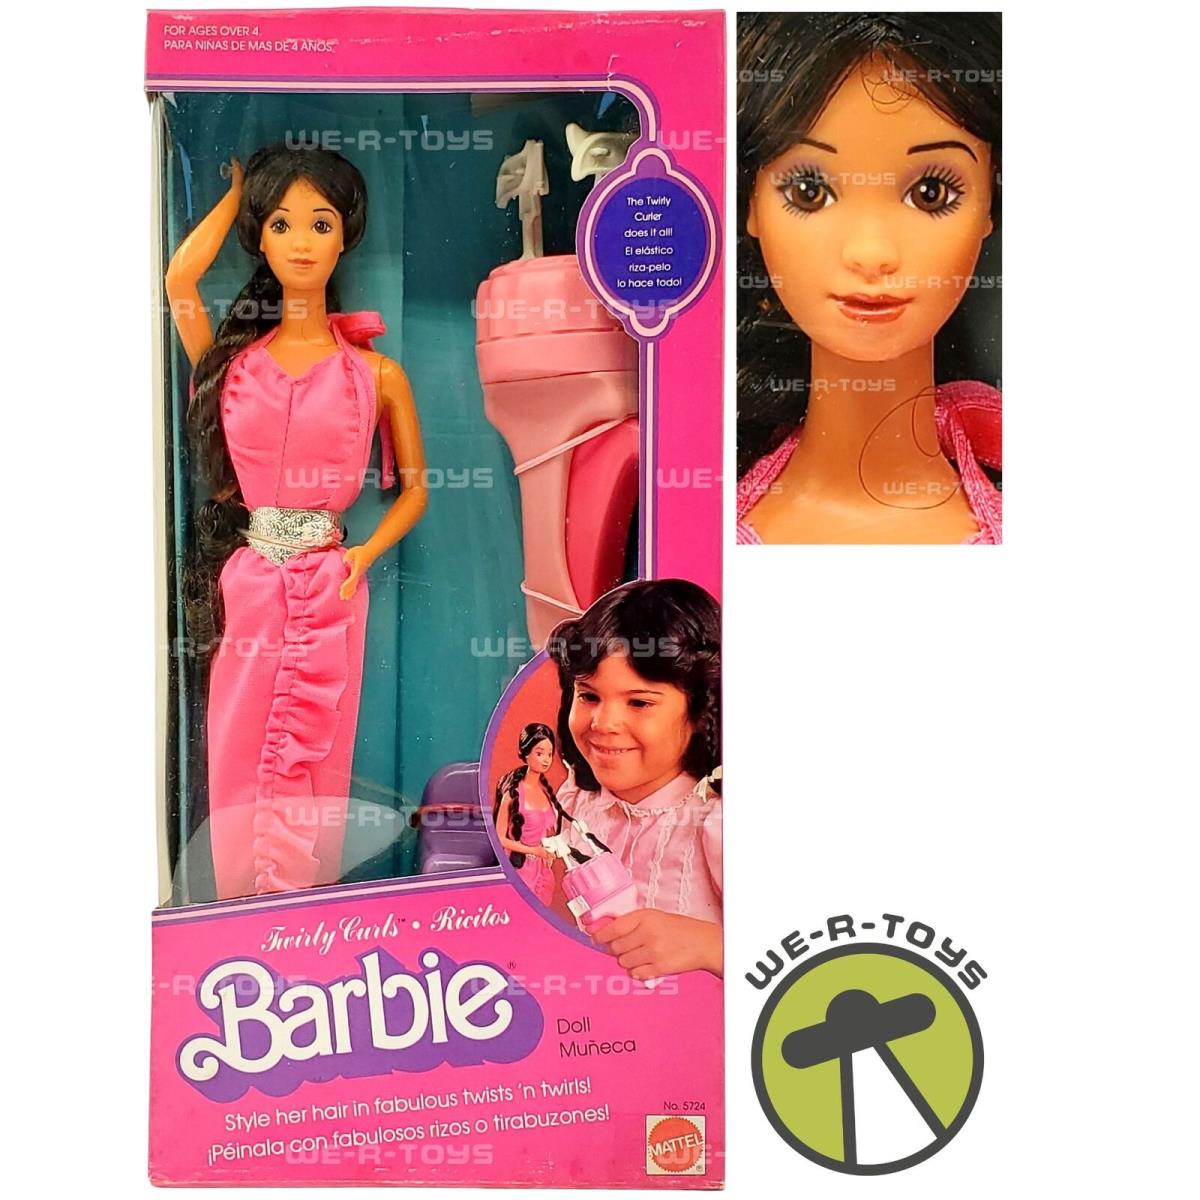 Twirly Curls Ricitos Hispanic Barbie Doll 1982 Mattel 5724 Nrfb